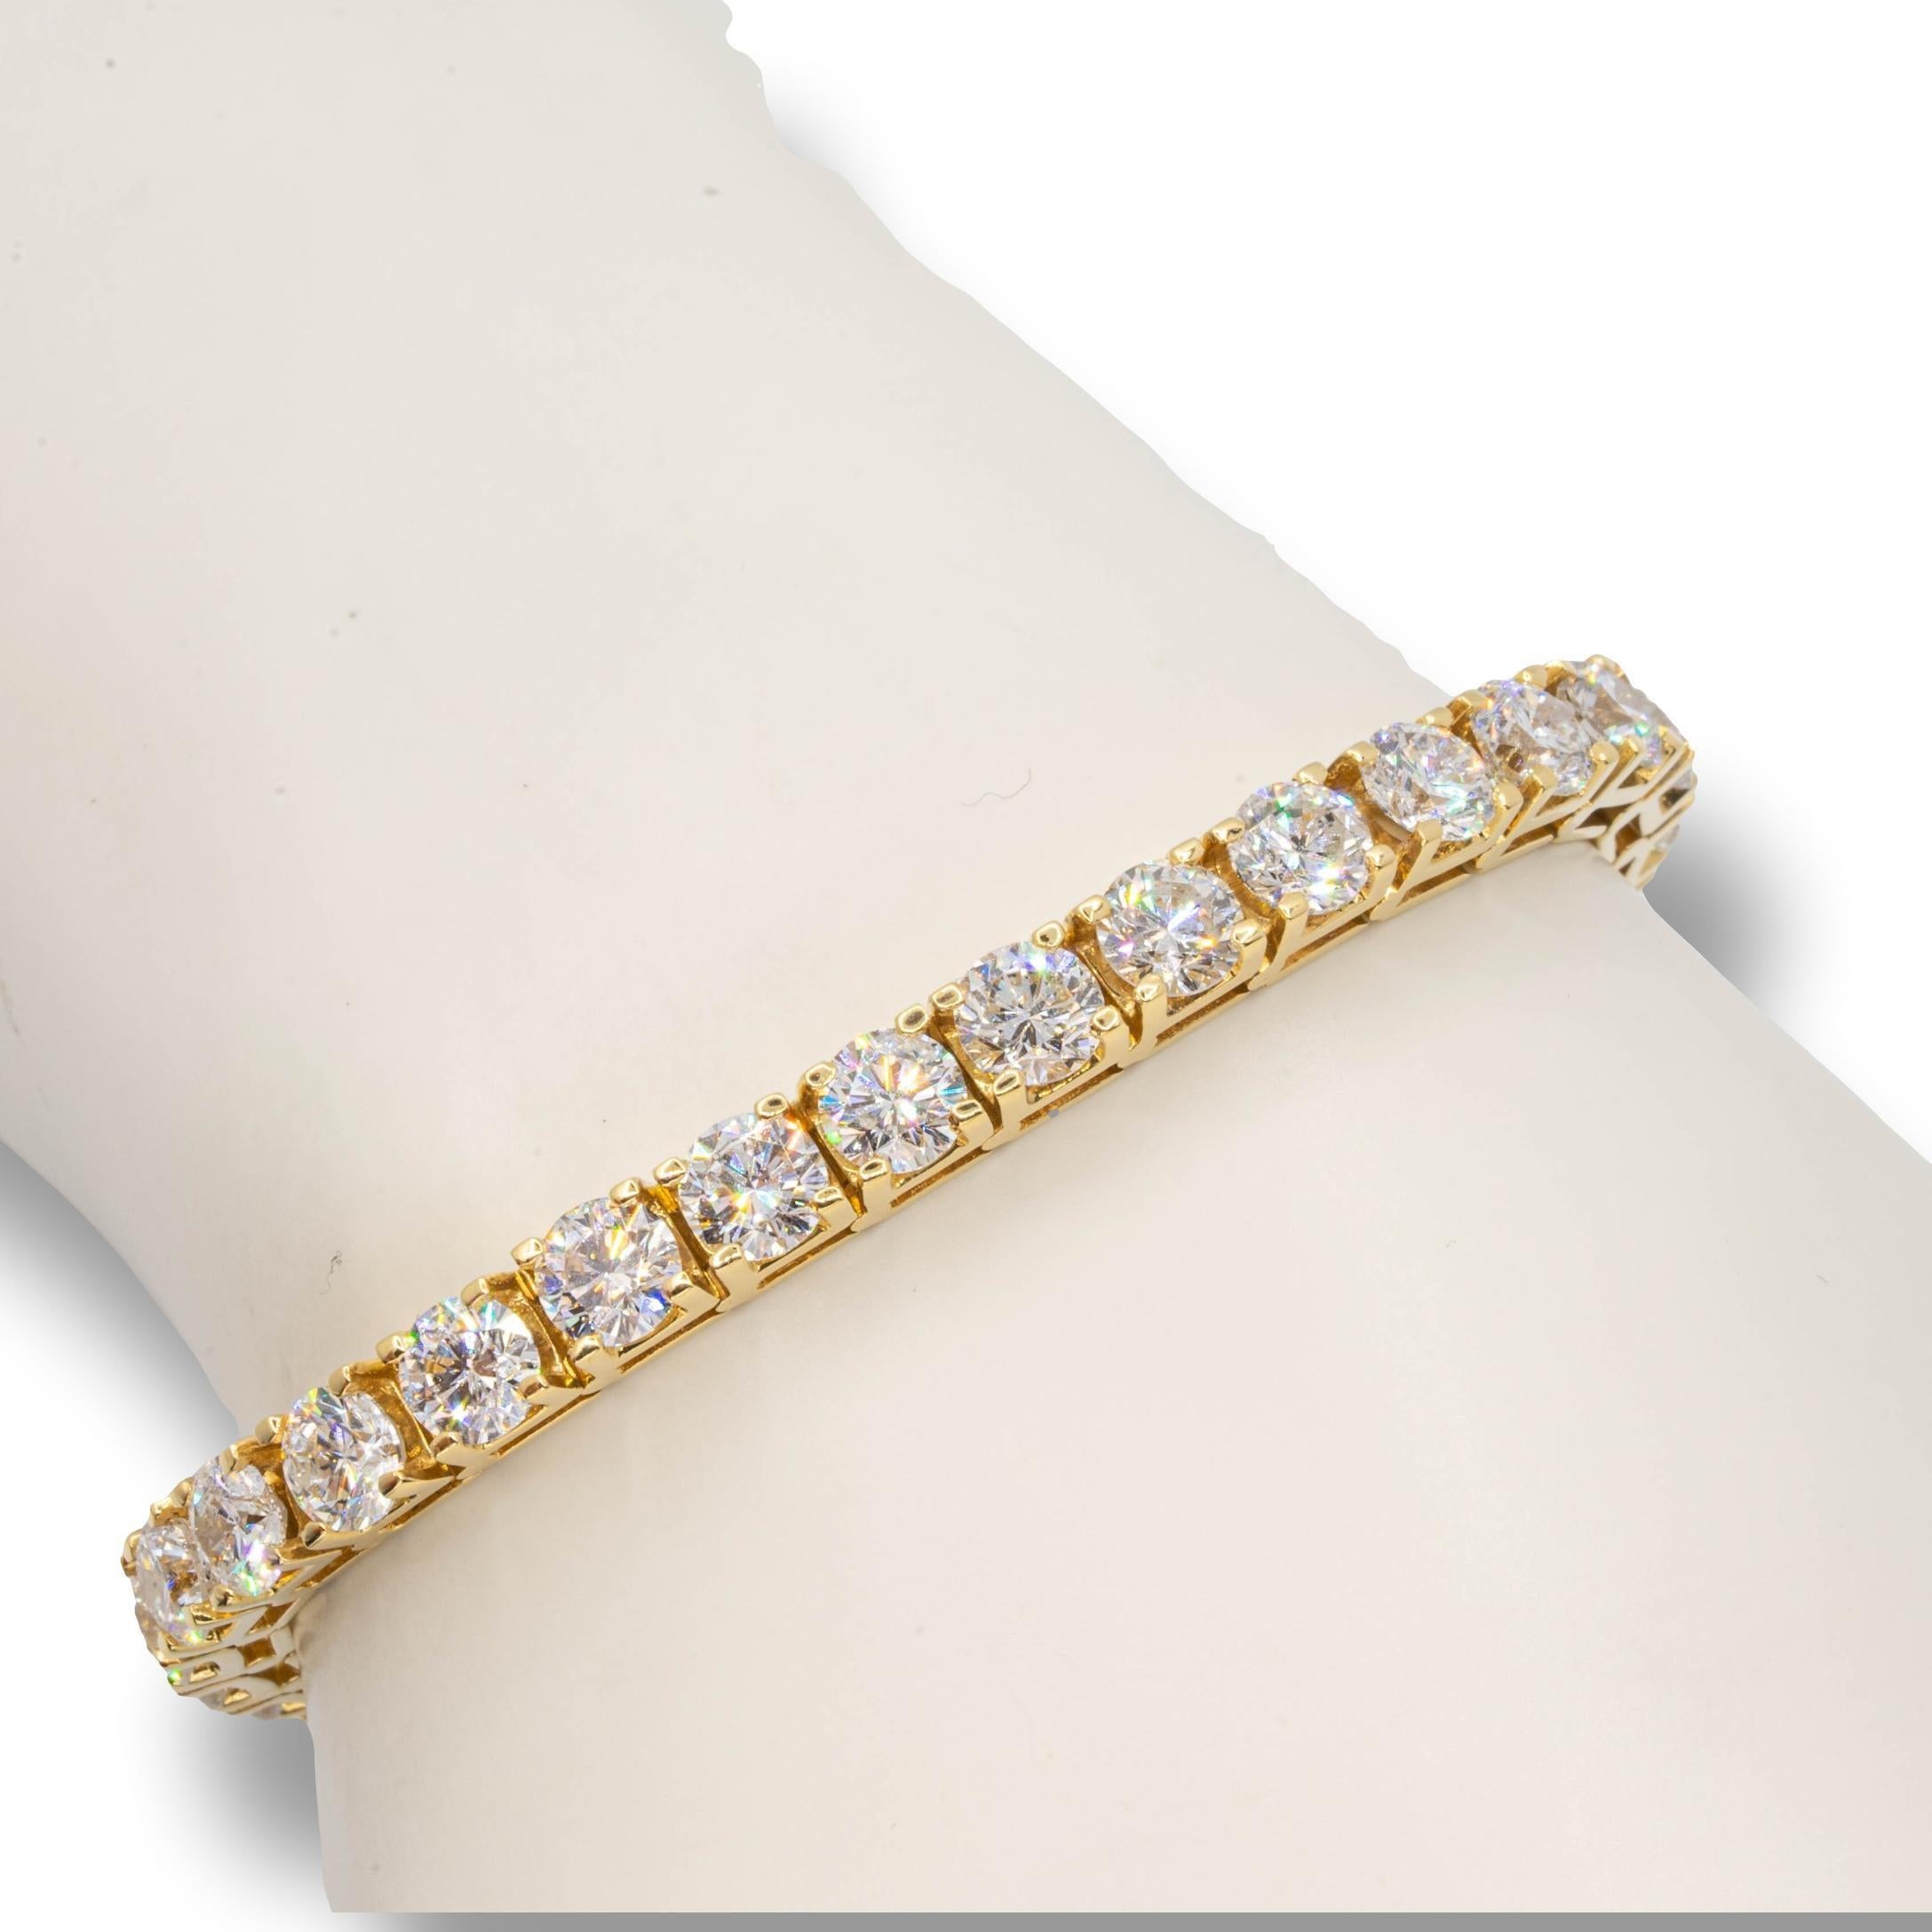 16 Carat Round Brilliant Cut Diamond Tennis Bracelet 18k Yellow Gold 6.5